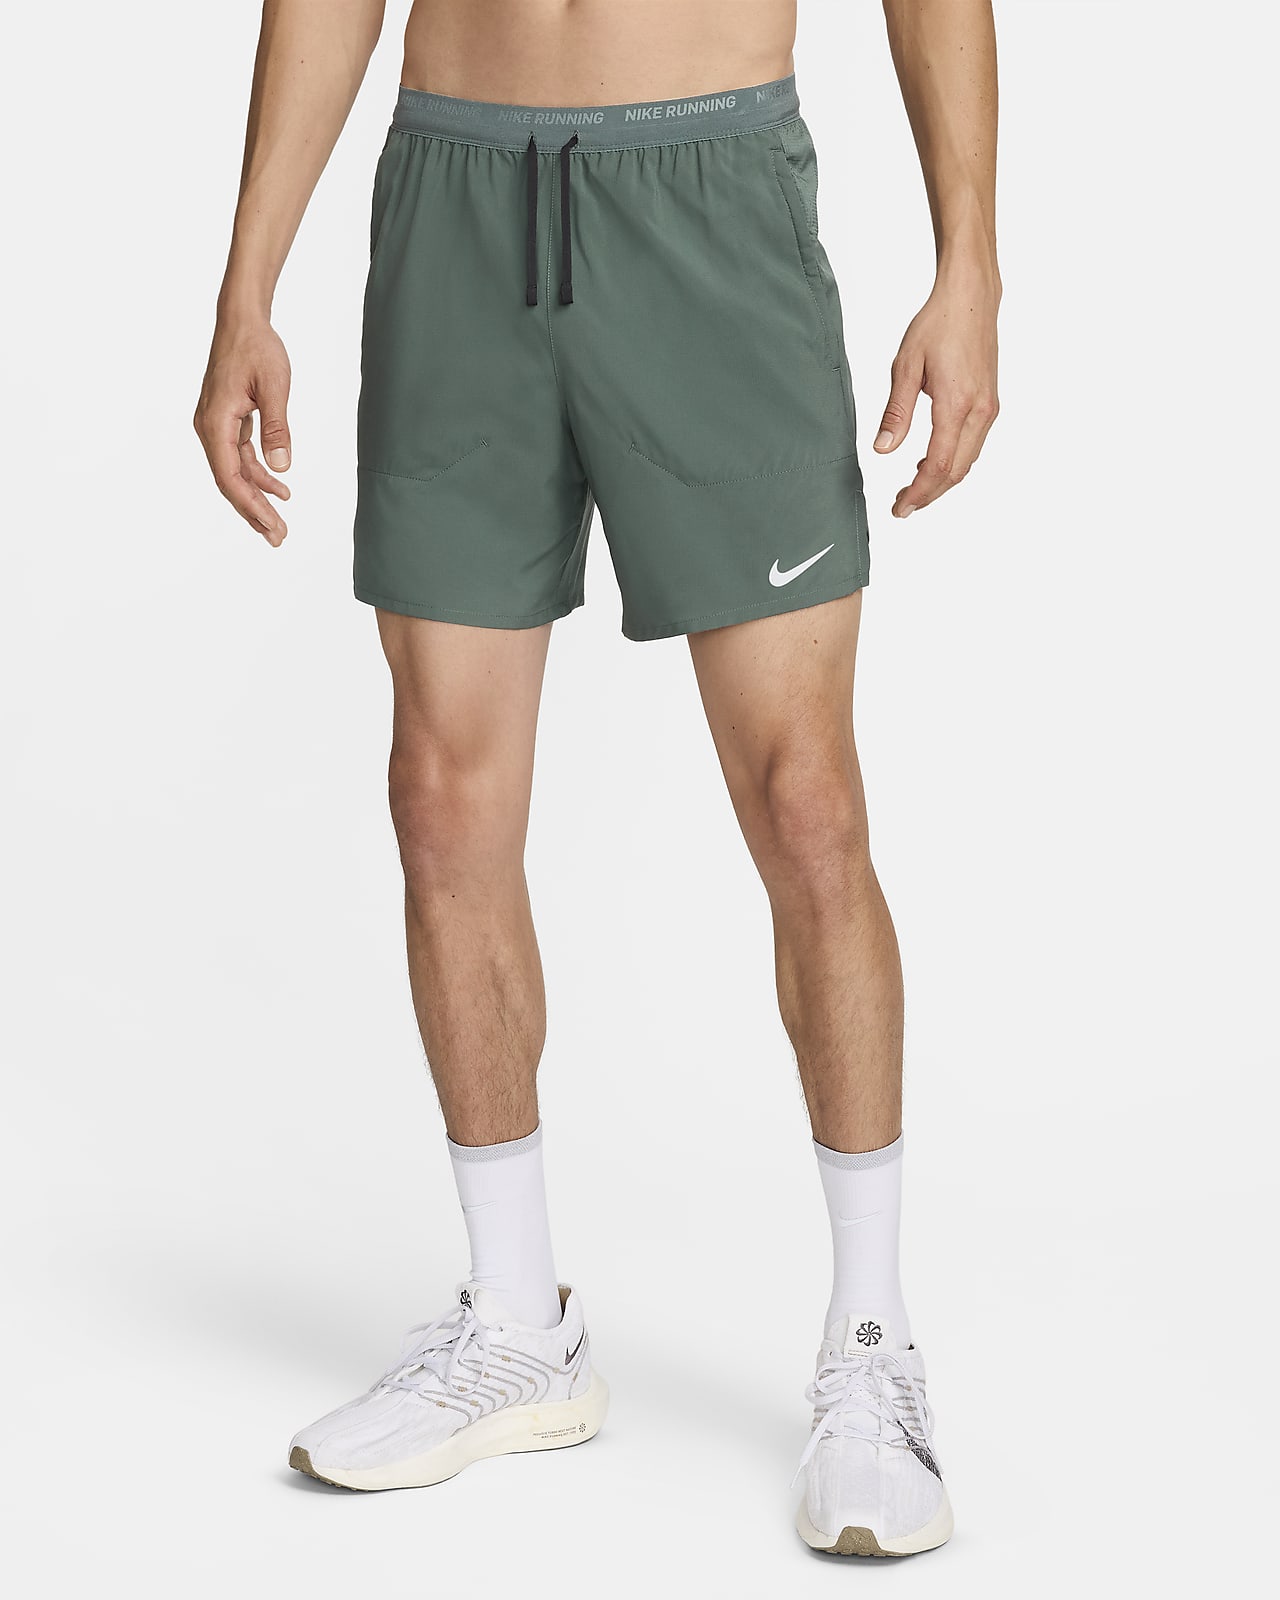 Nike Stride Pantalons curts 2 en 1 de 18 cm Dri-FIT de running - Home